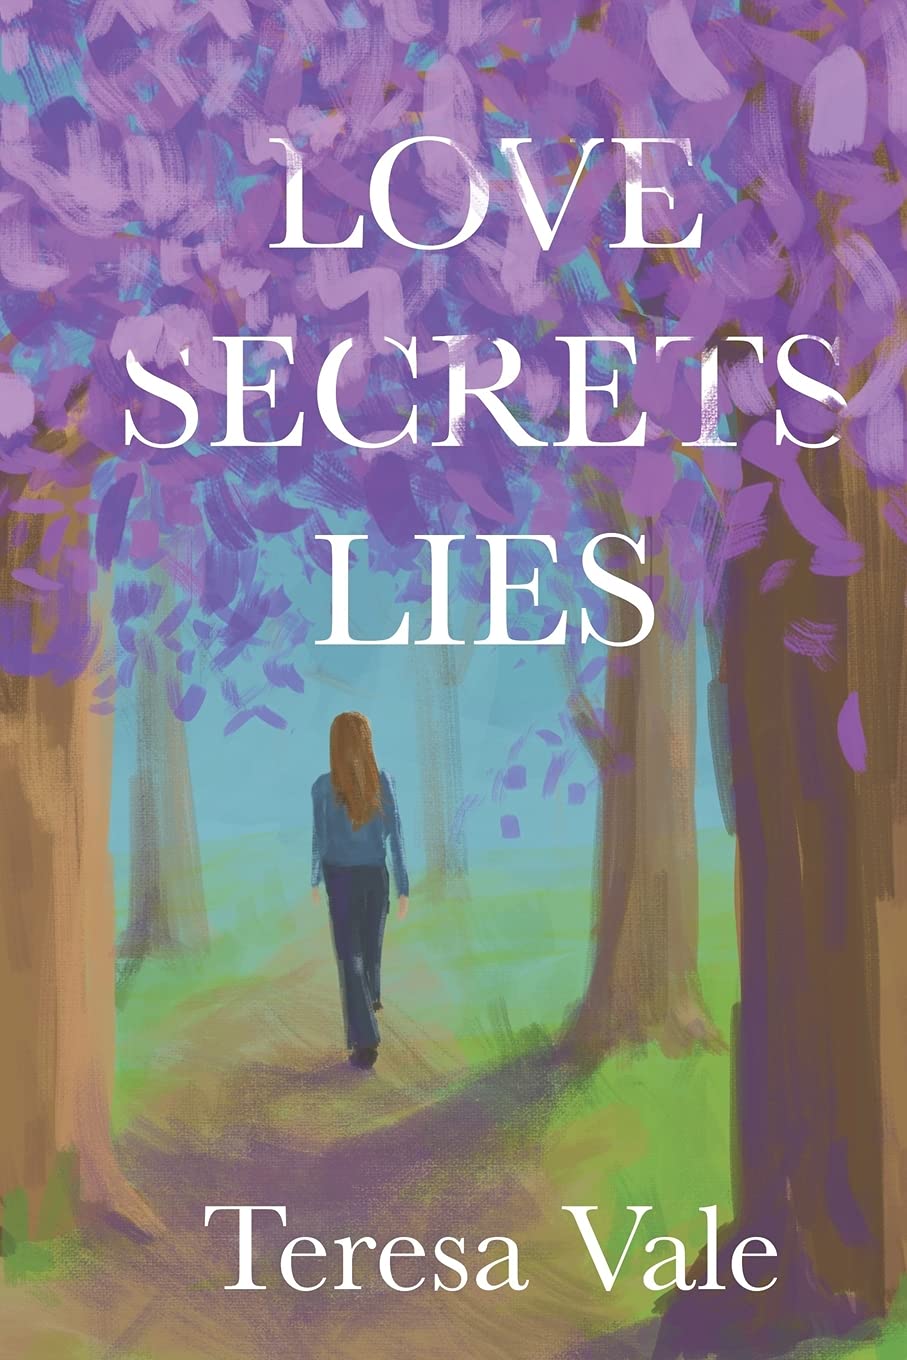 Book Review - Love Secrets Lies by Teresa Vale